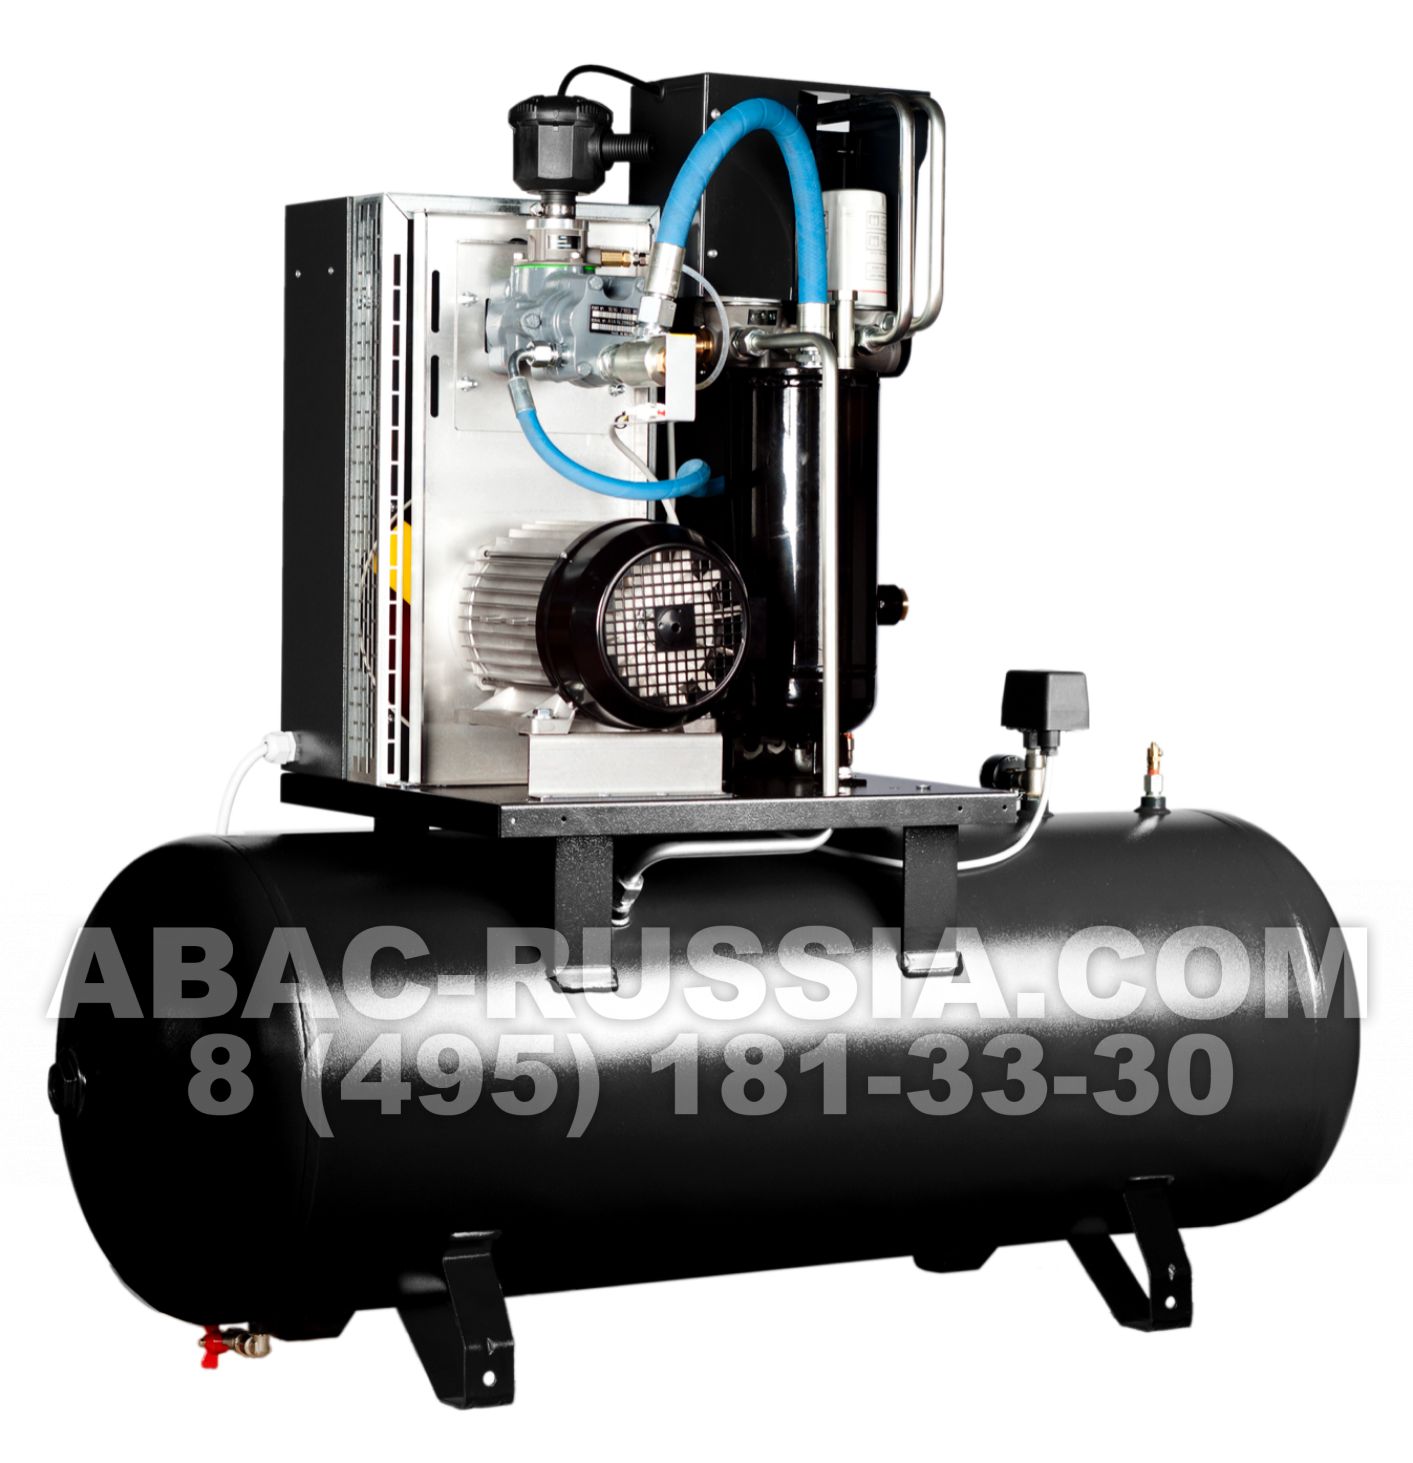 Винтовой компрессор ABAC MICRON 1513 - 500